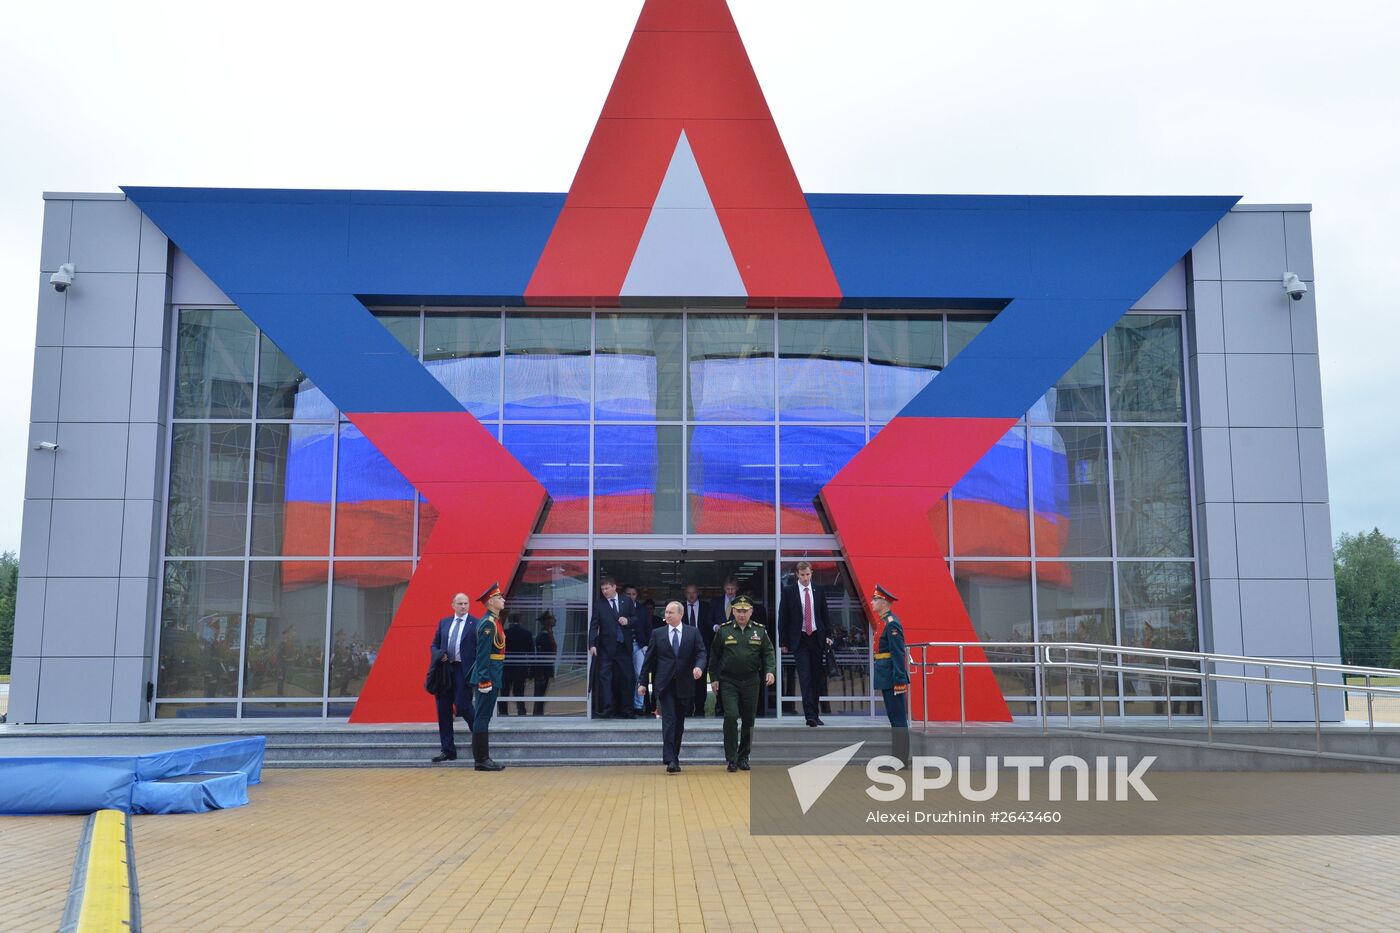 President Vladimir Putin takes part in opening Army-2015 international military technology forum